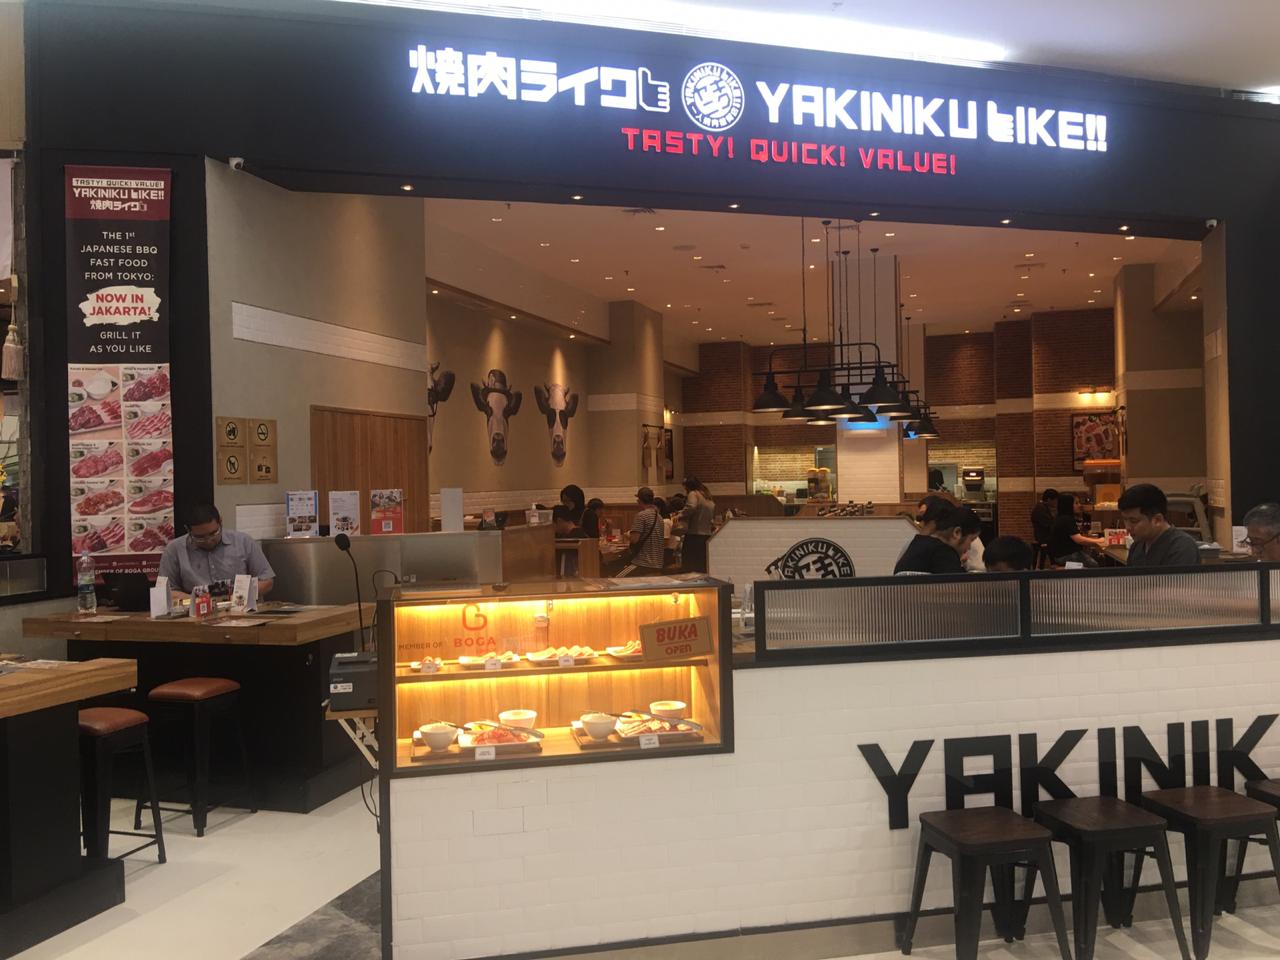 Yakiniku Like shop front in lippo mall puri st. moritz